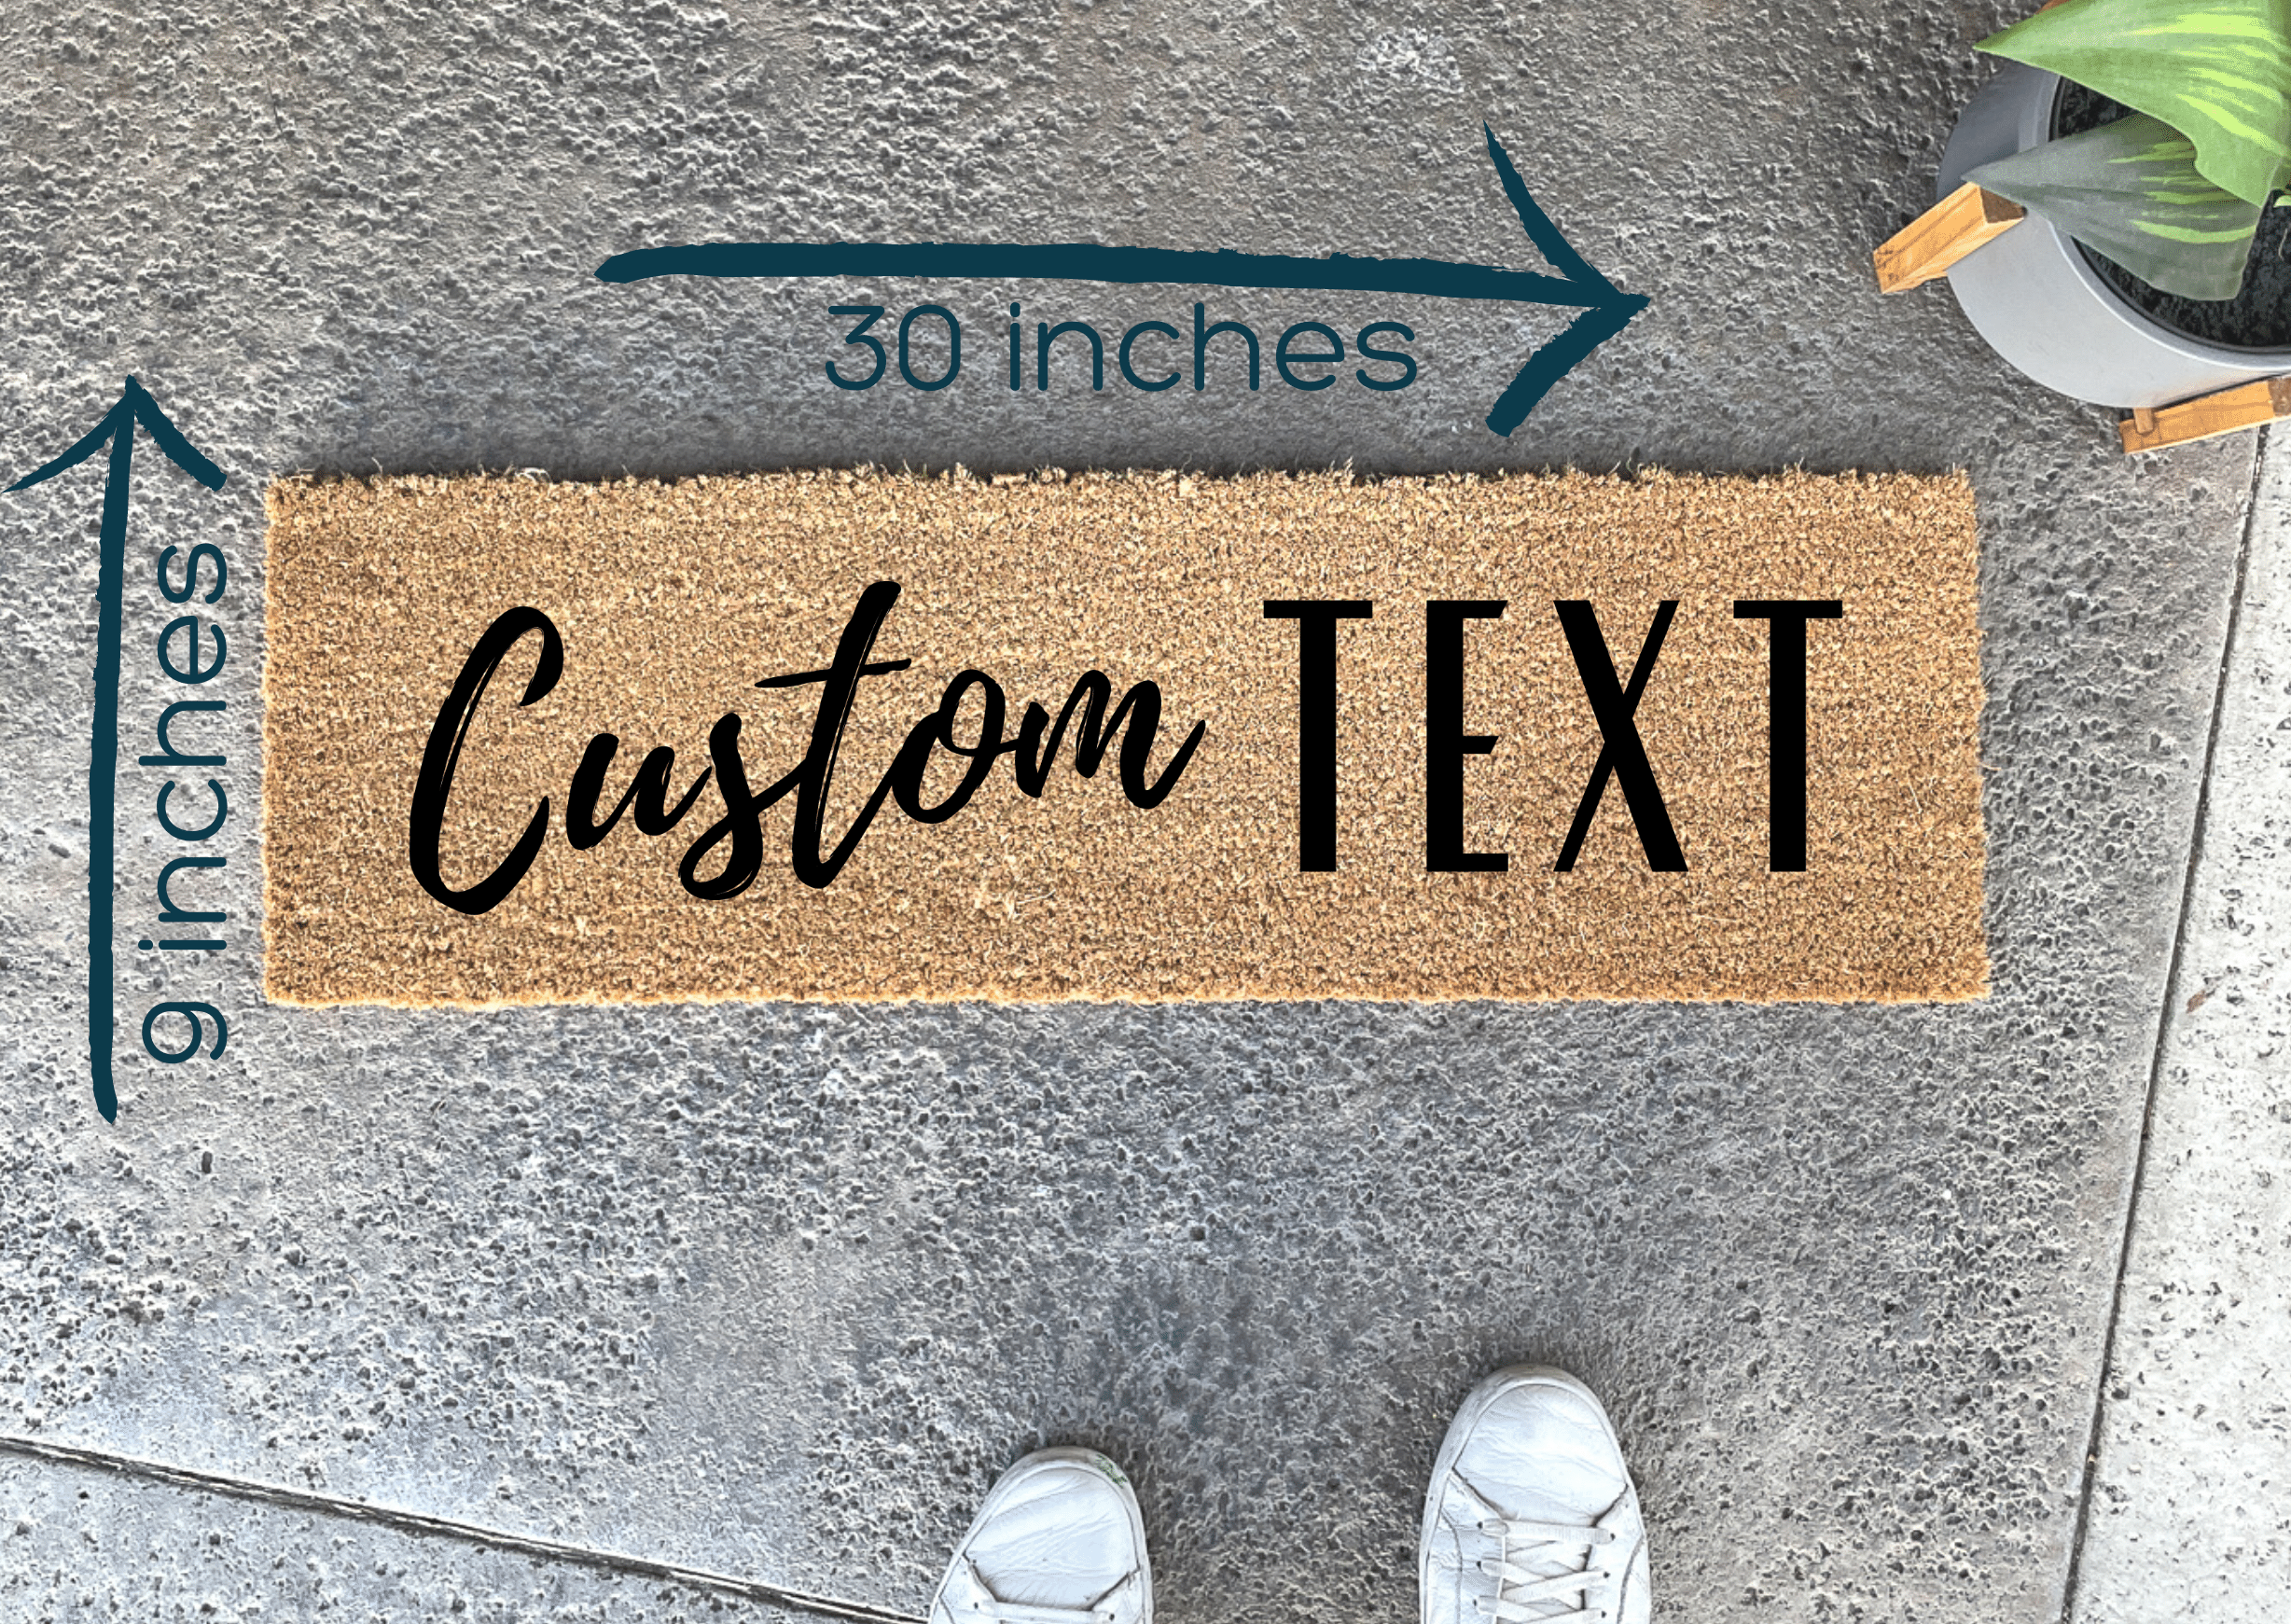 Custom Skinny Doormat - 9 x 30